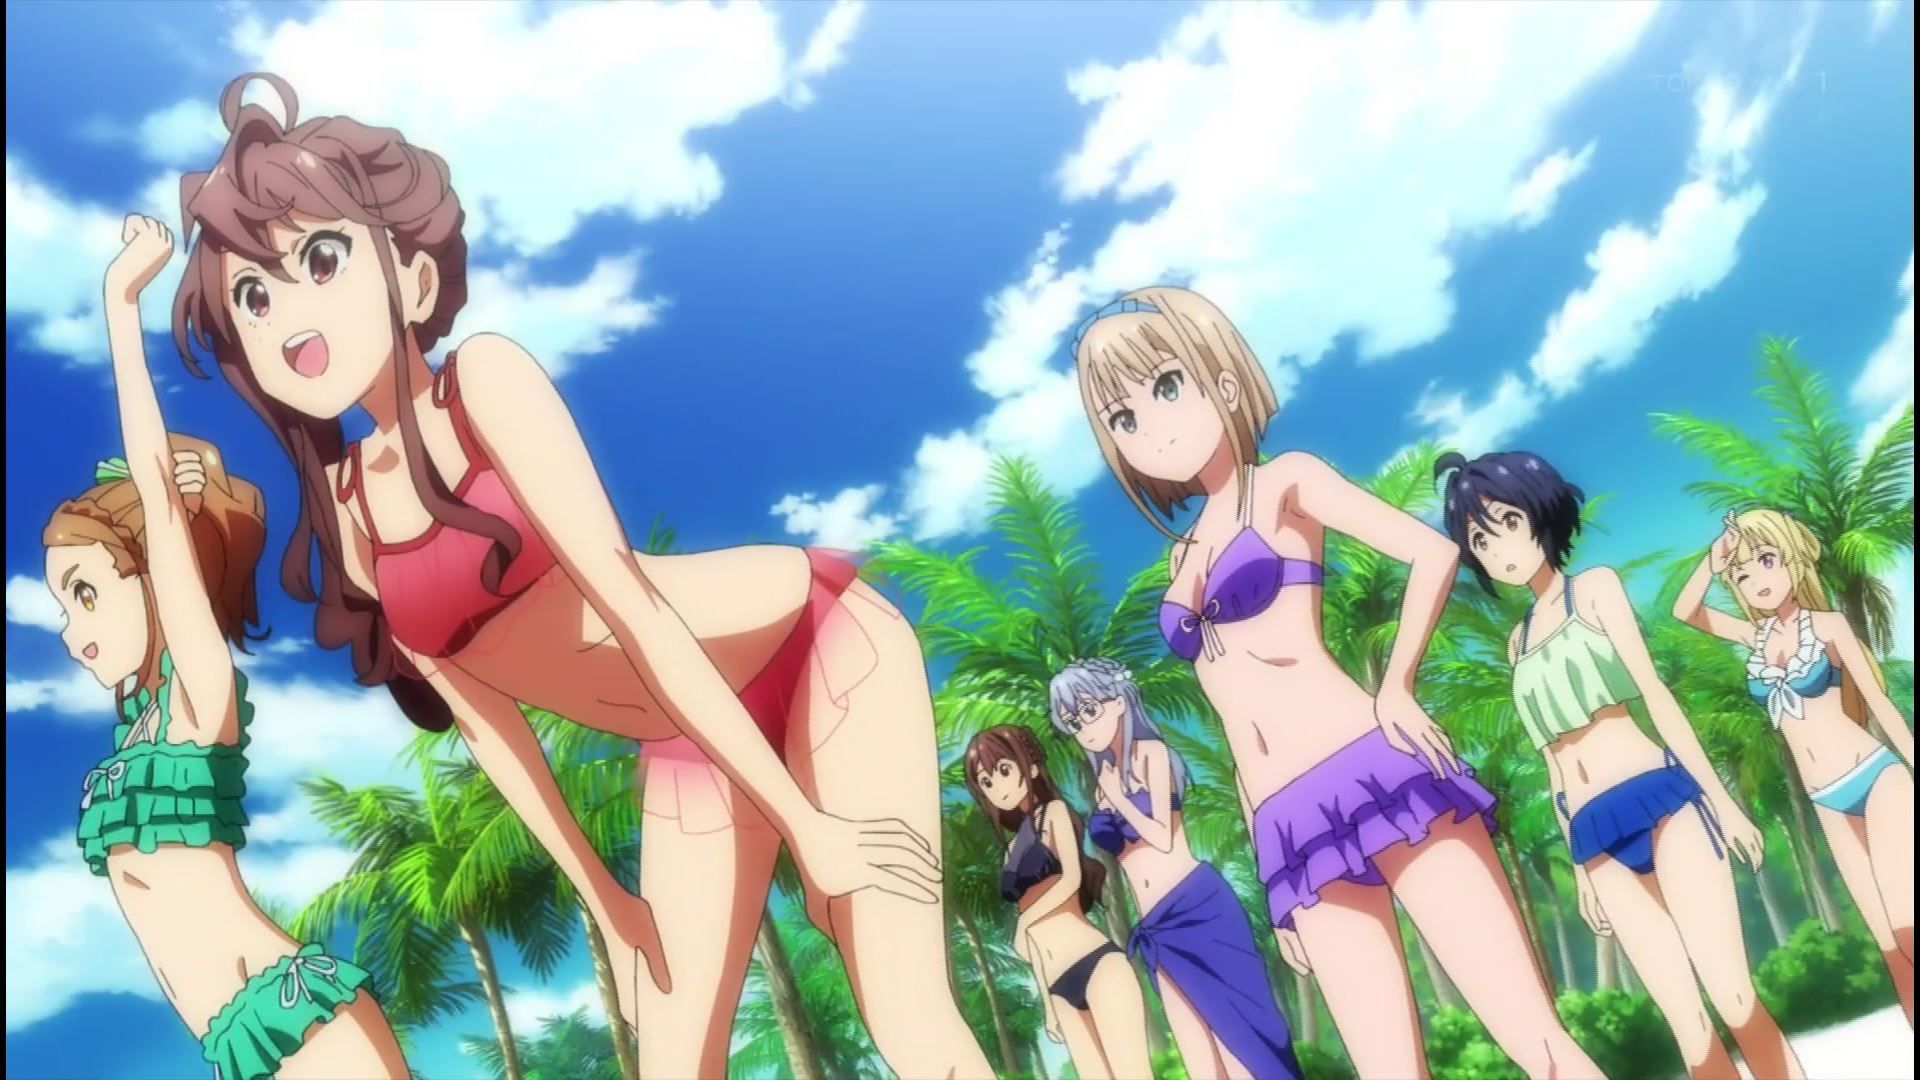 Anime [22/7 (Nanabun Nonijuuni)] 6 episodes erotic scene of girls erotic swimsuit! 2